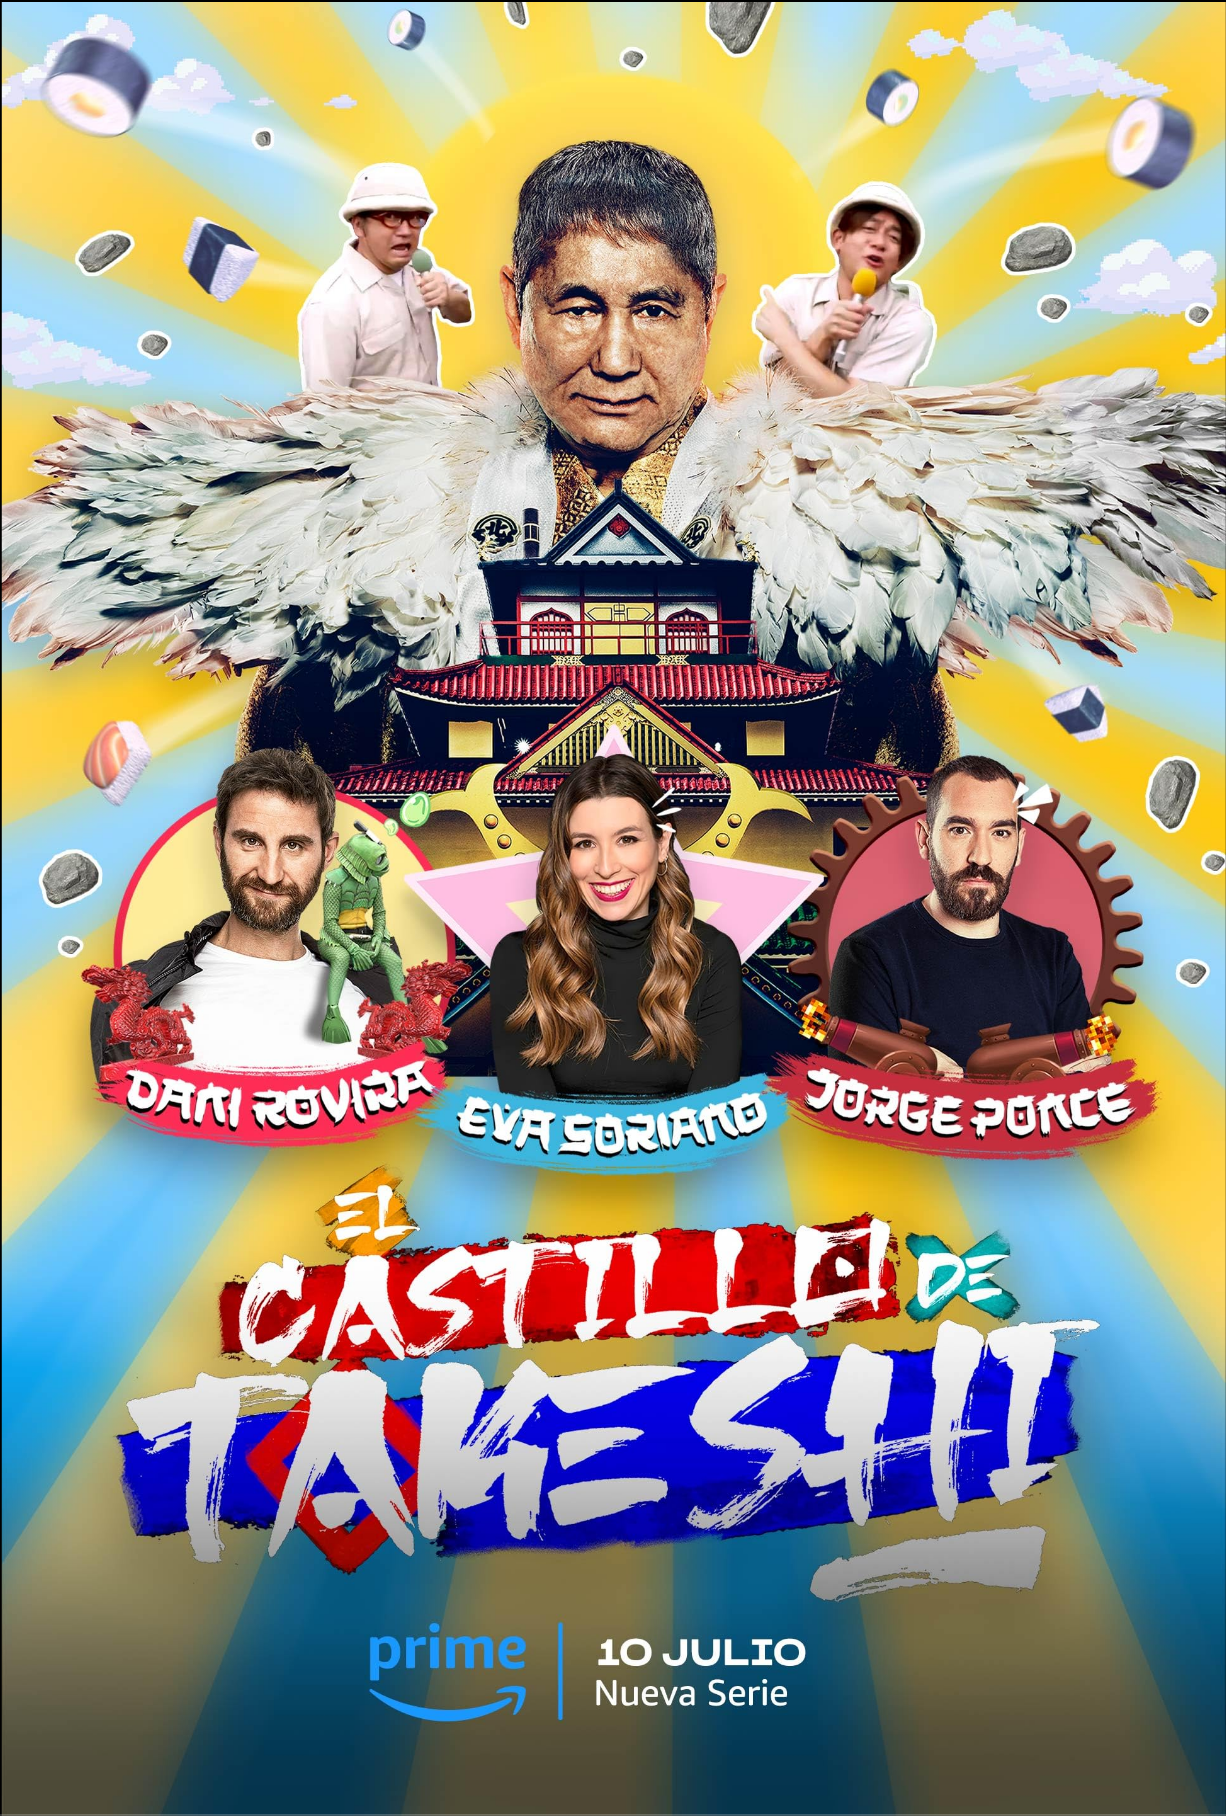 El castell de Takeshi